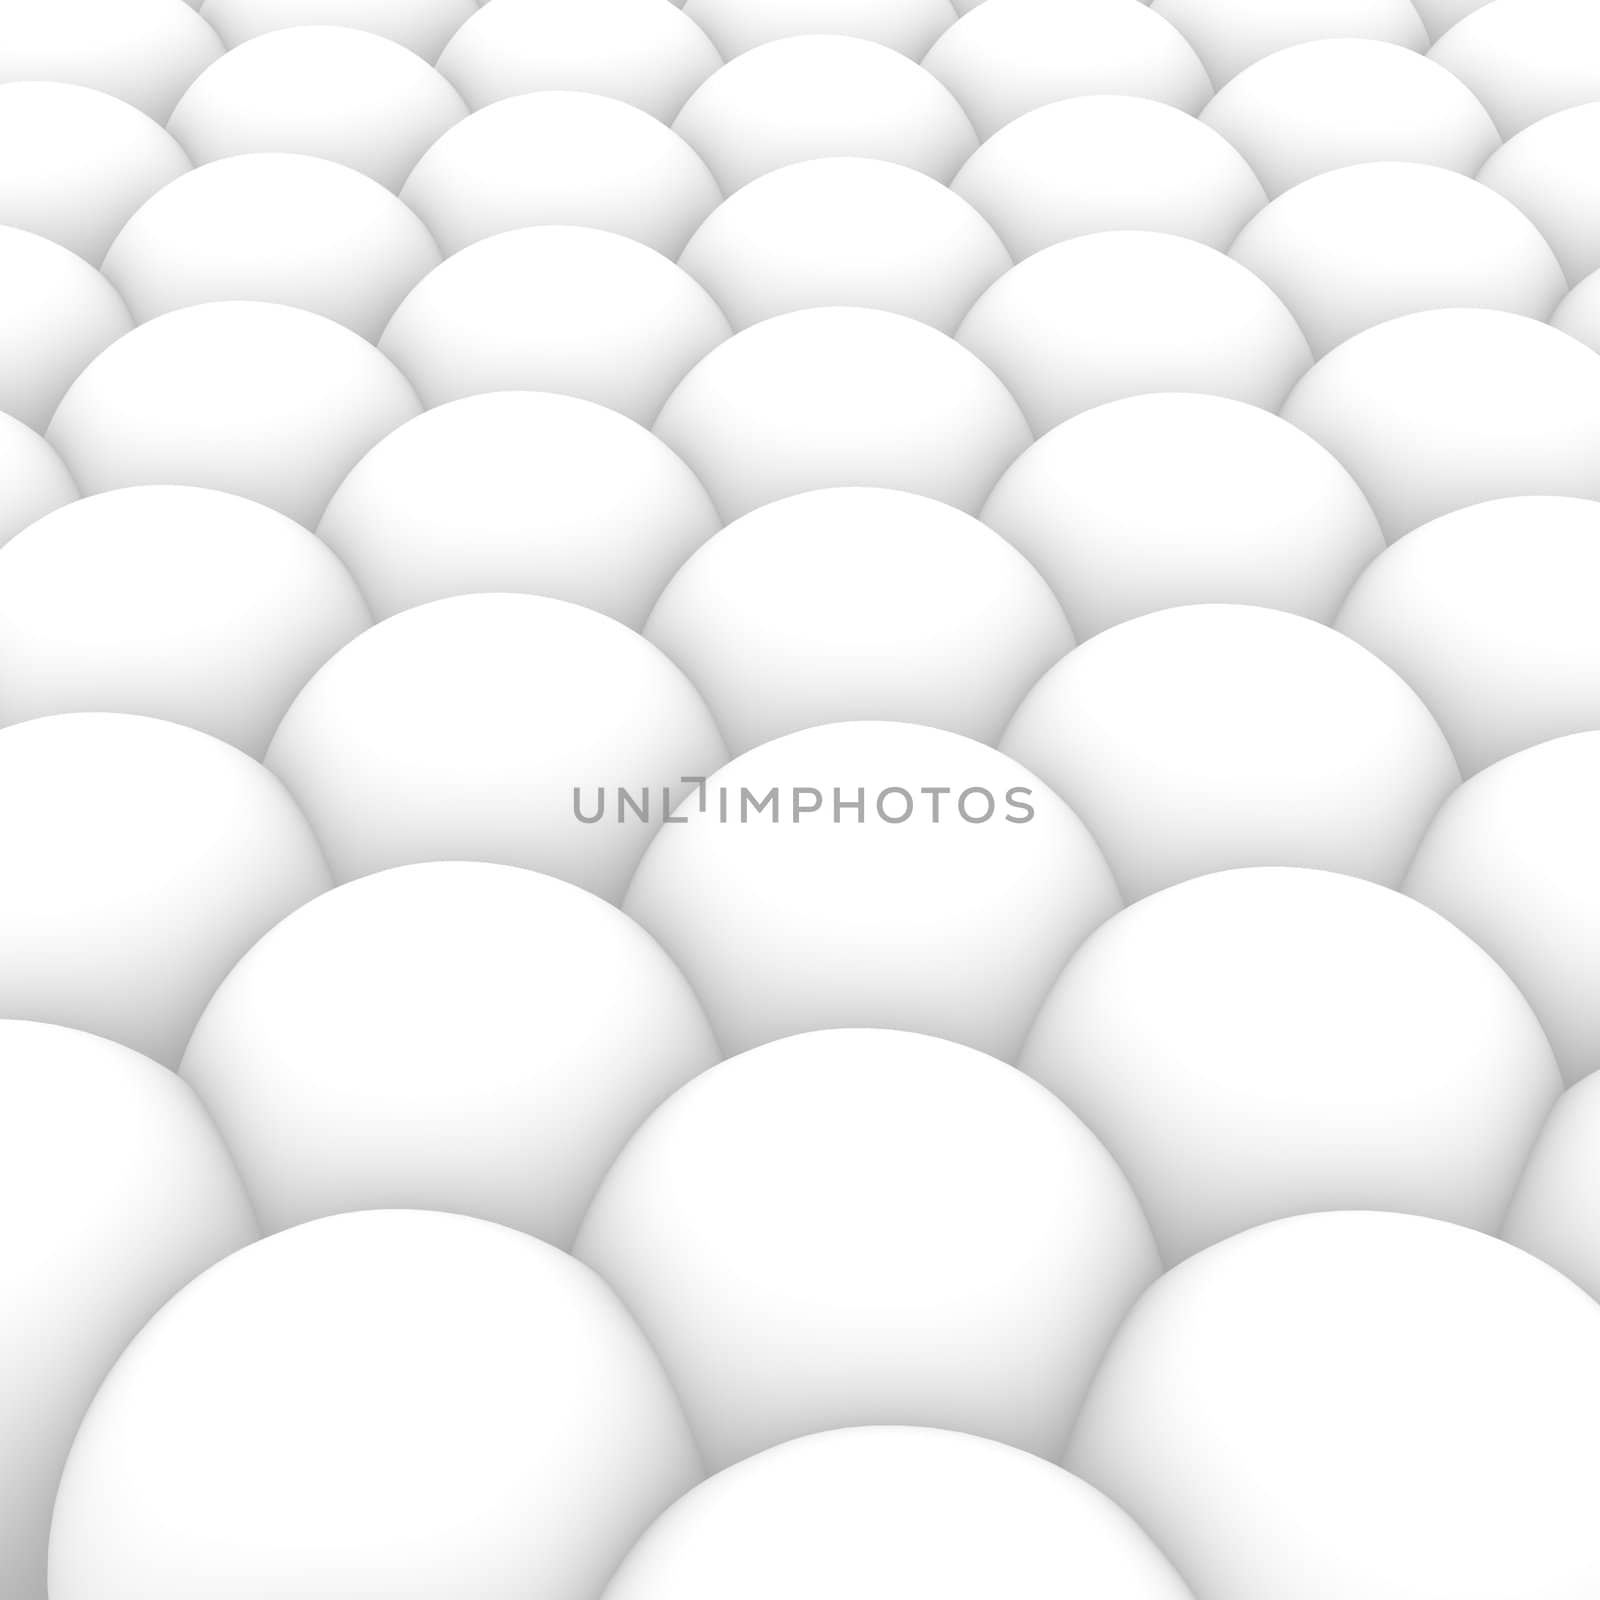 Spheres pattern background by skvoor